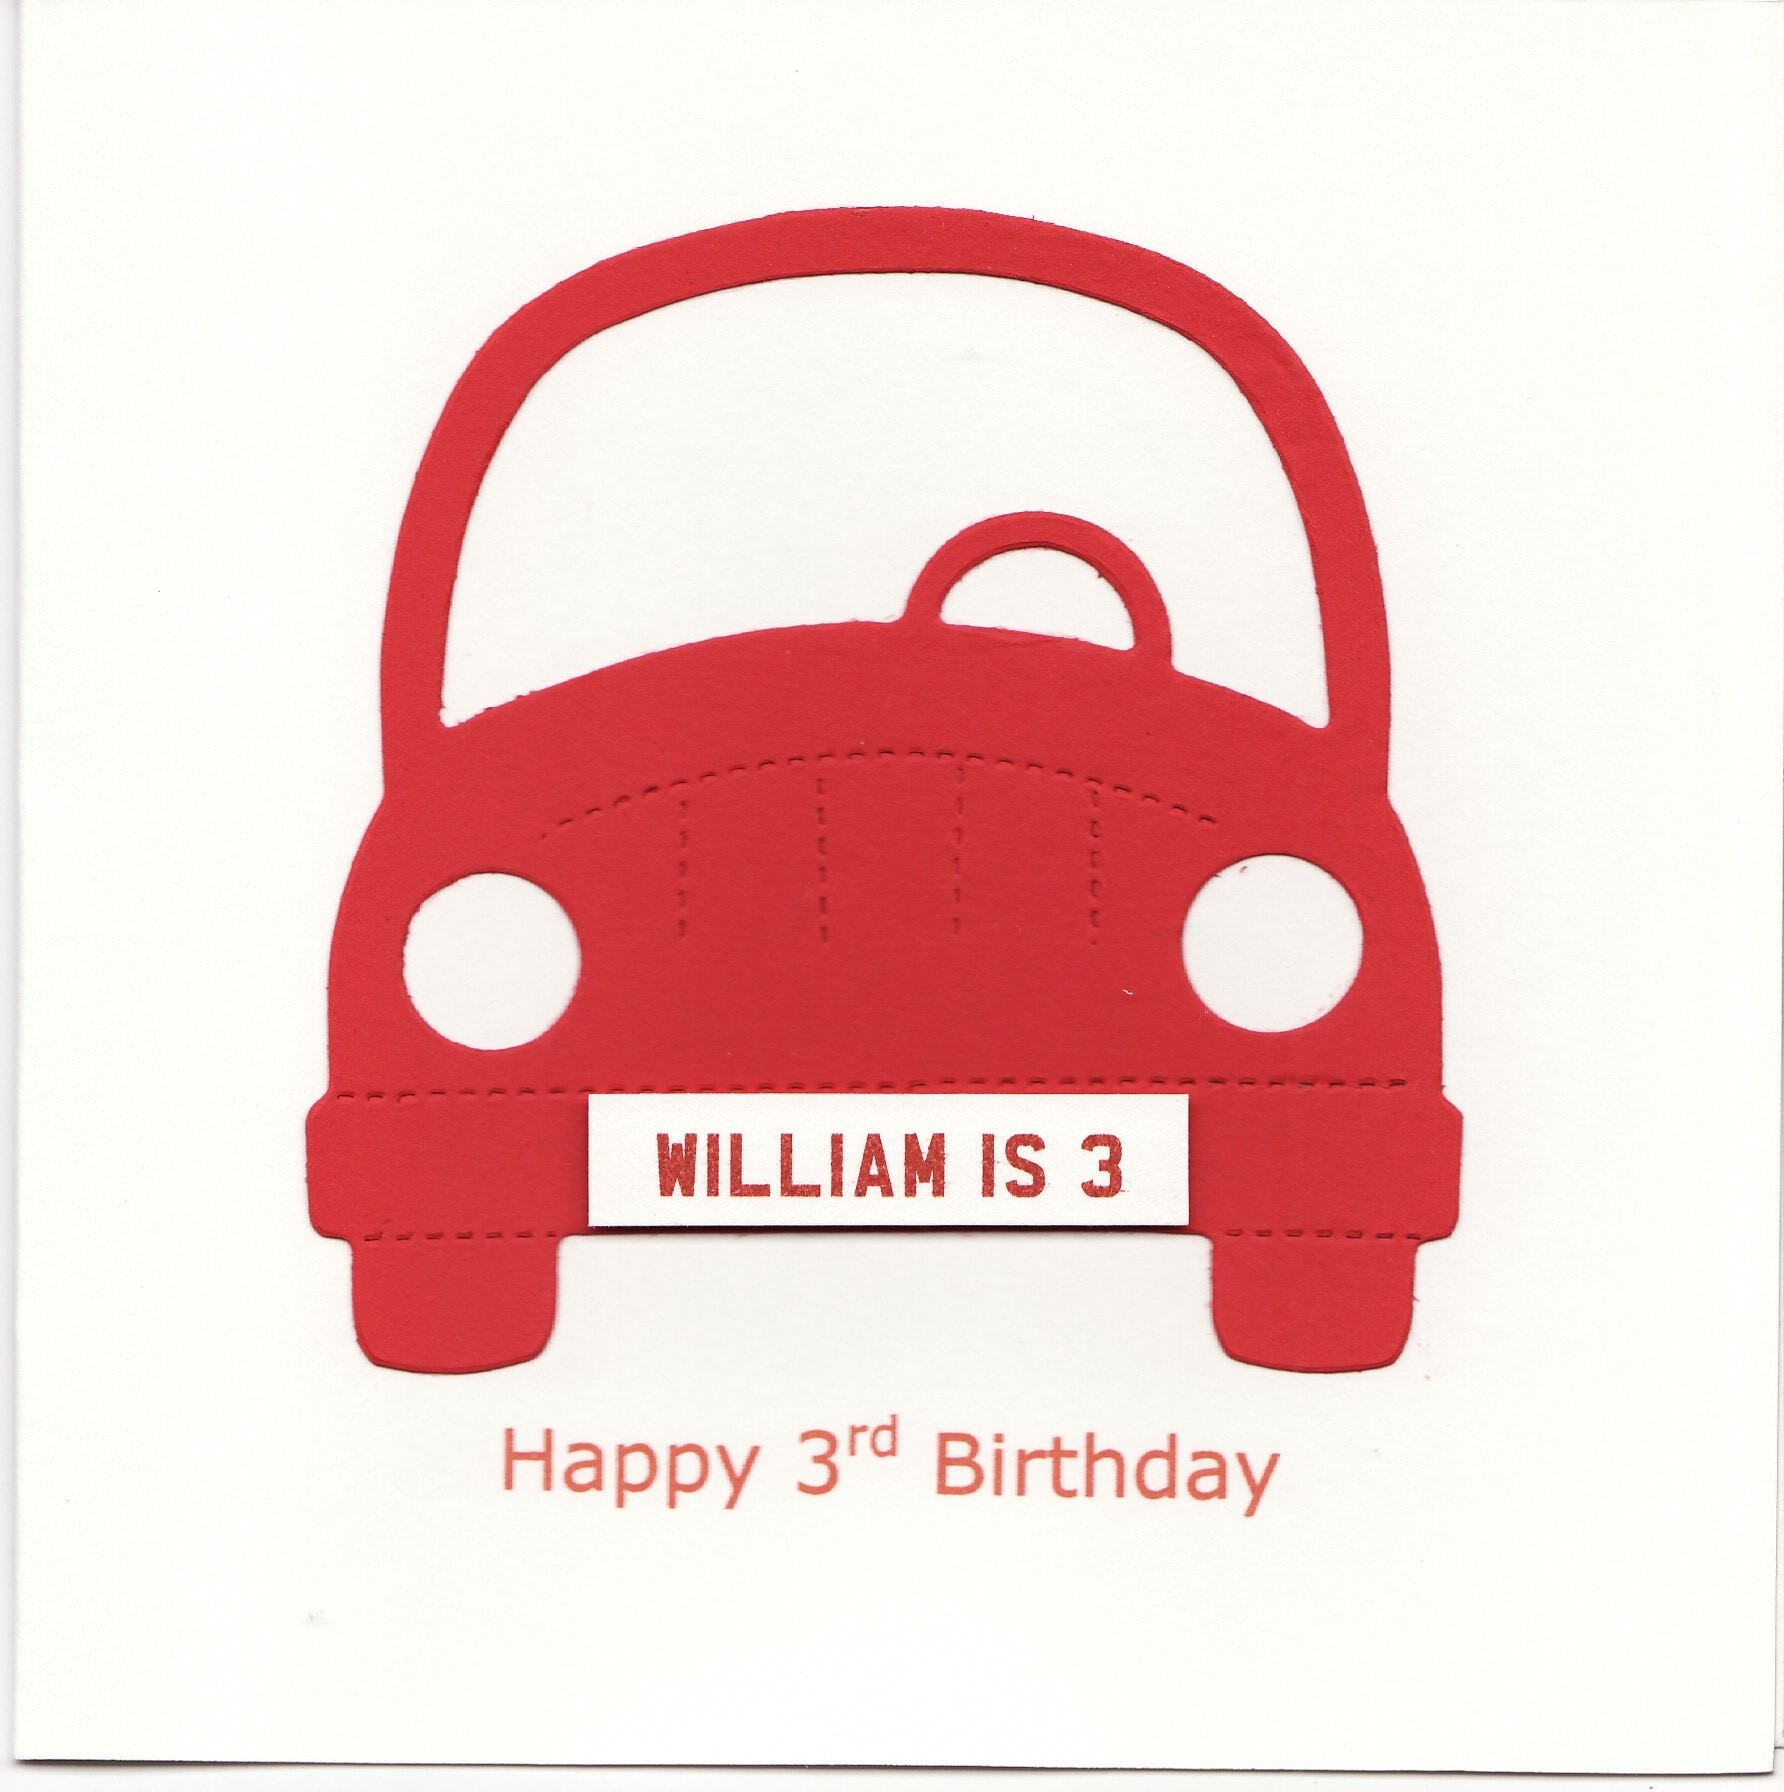 Birthday Card - Herbie car